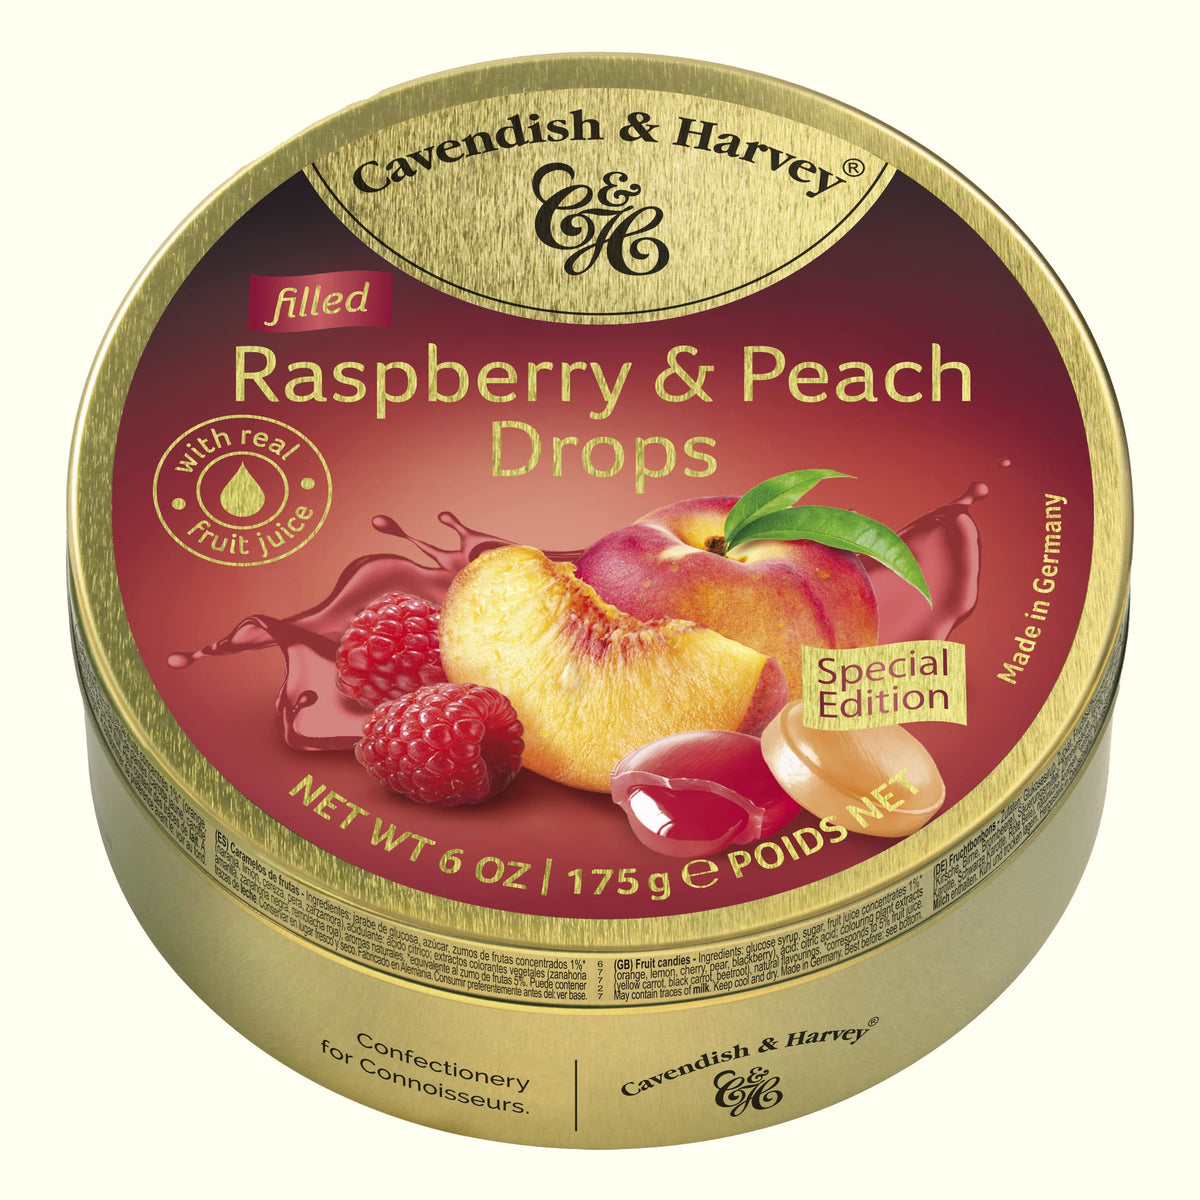 Cavendish & Harvey Raspberry & Peach Drops 175g